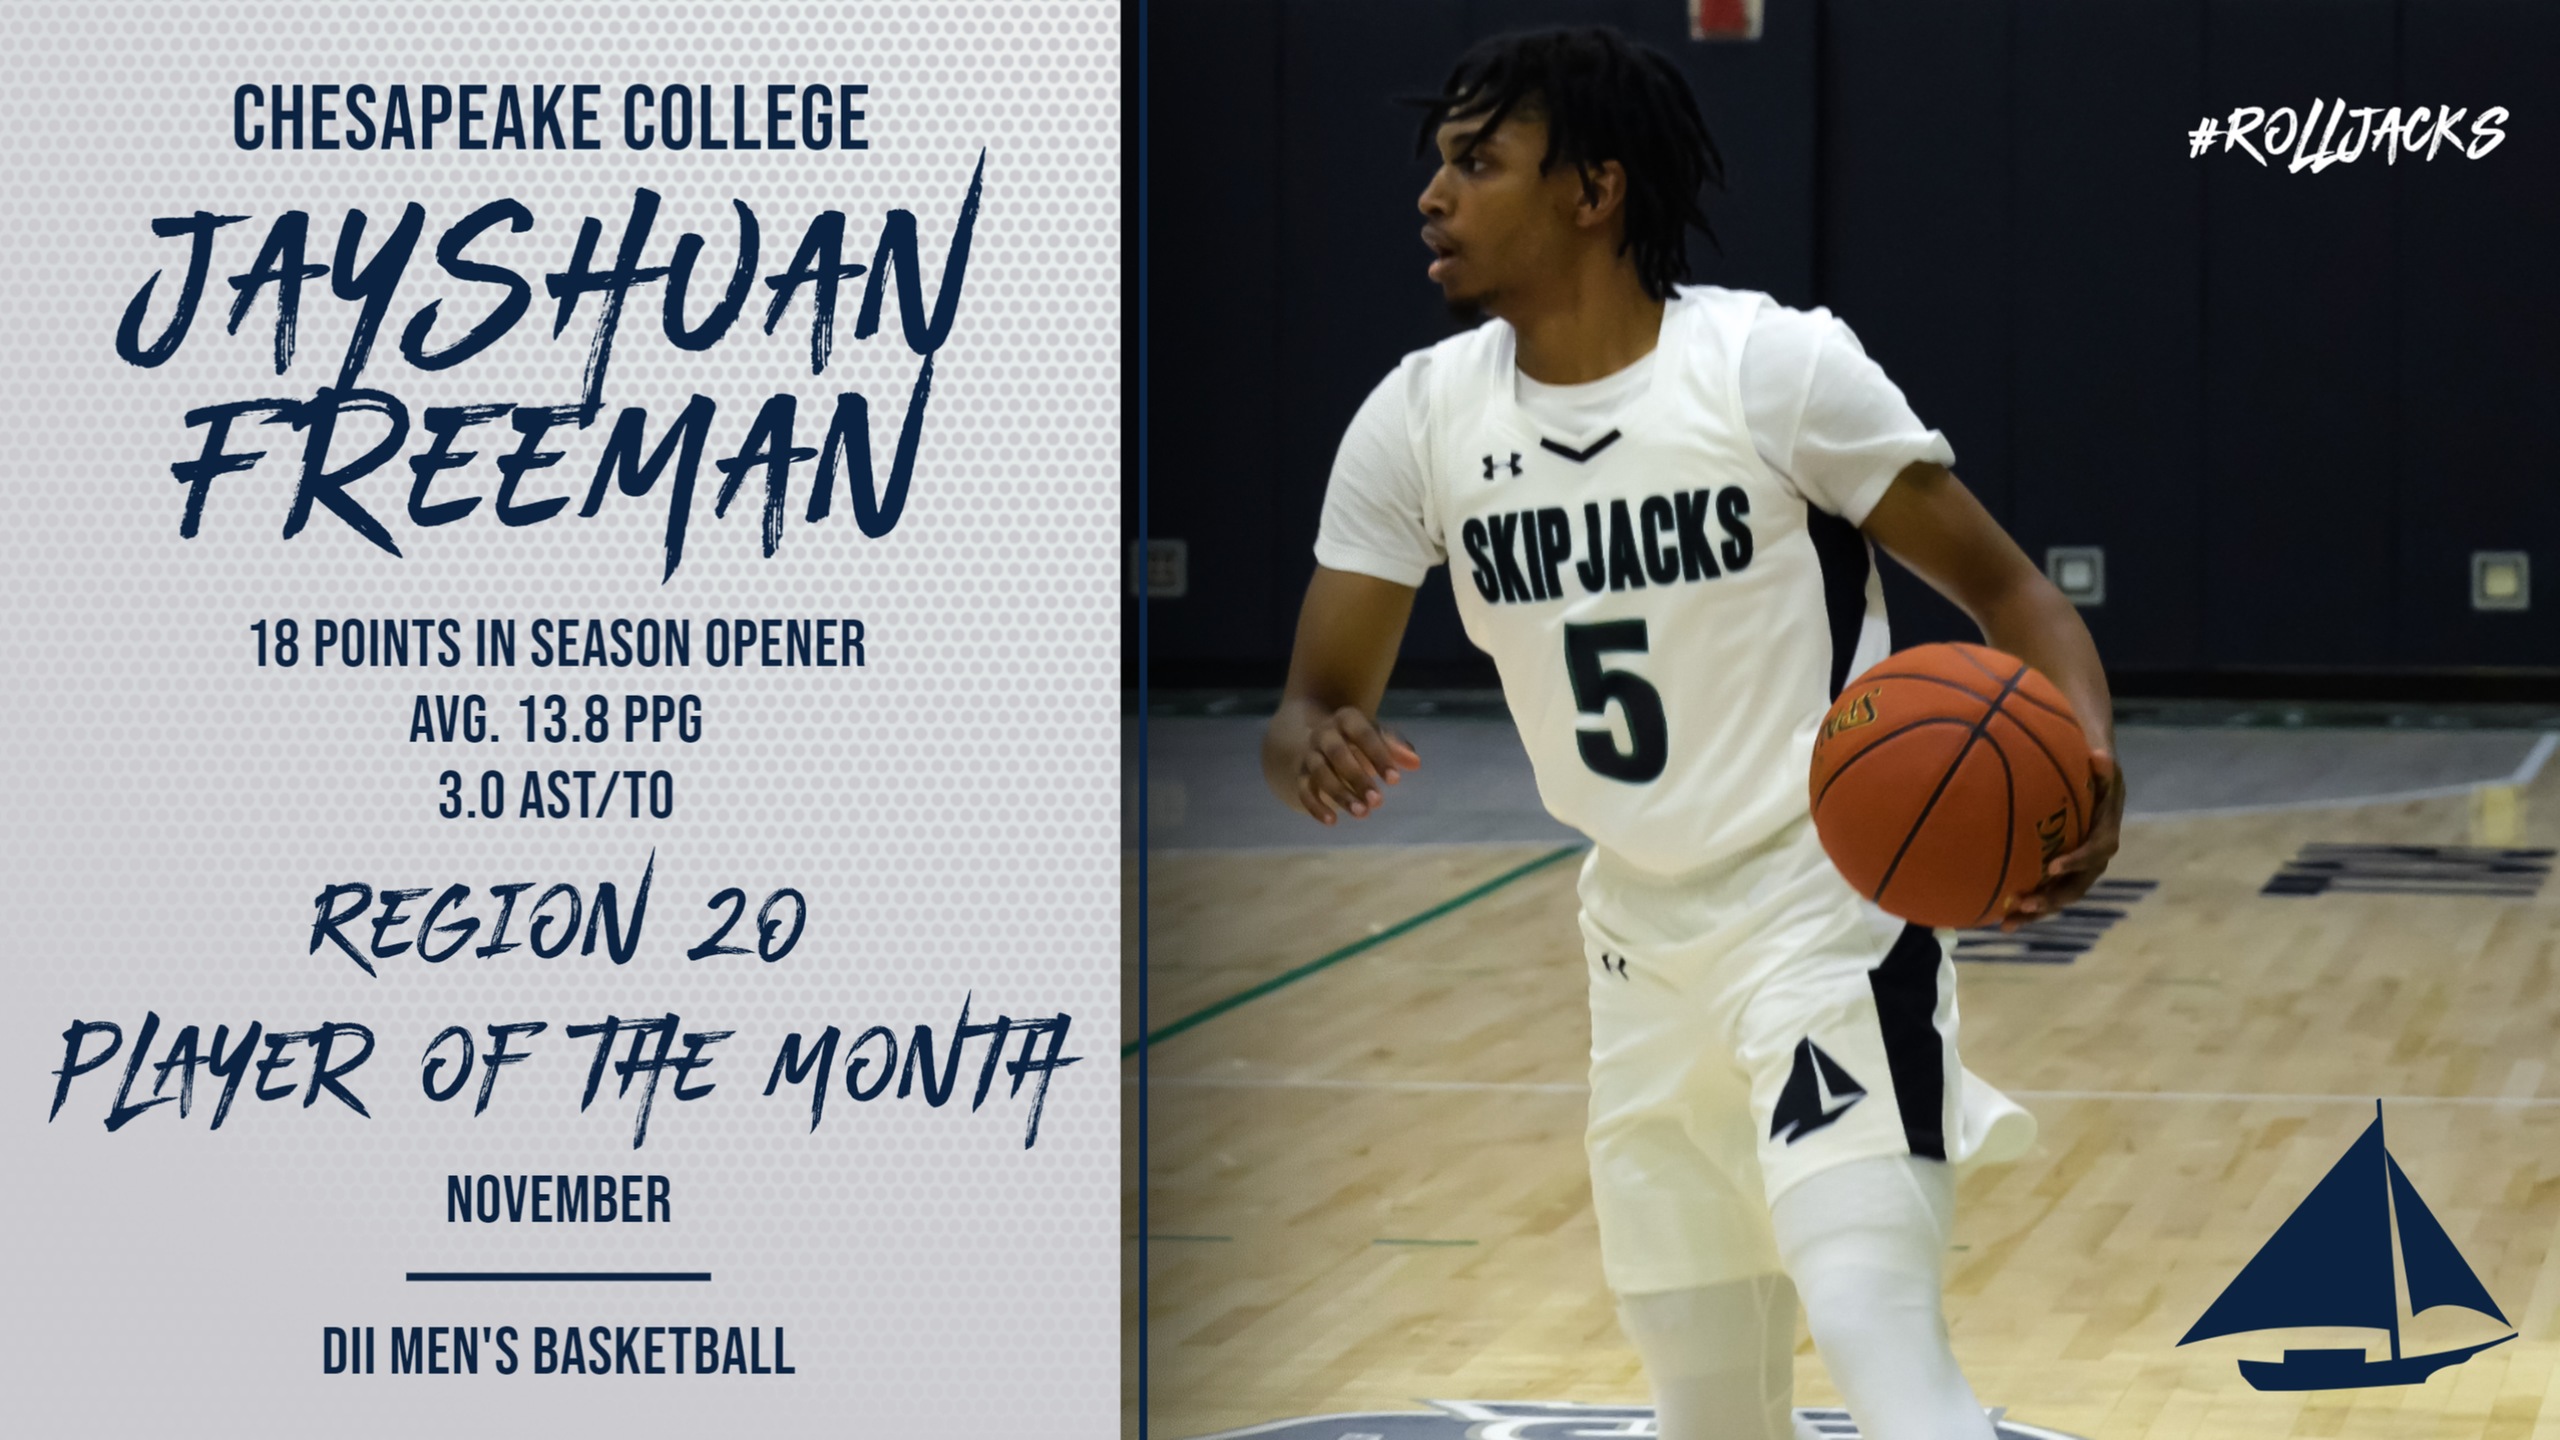 Region 20 Player of the Month - JayShaun Freeman!